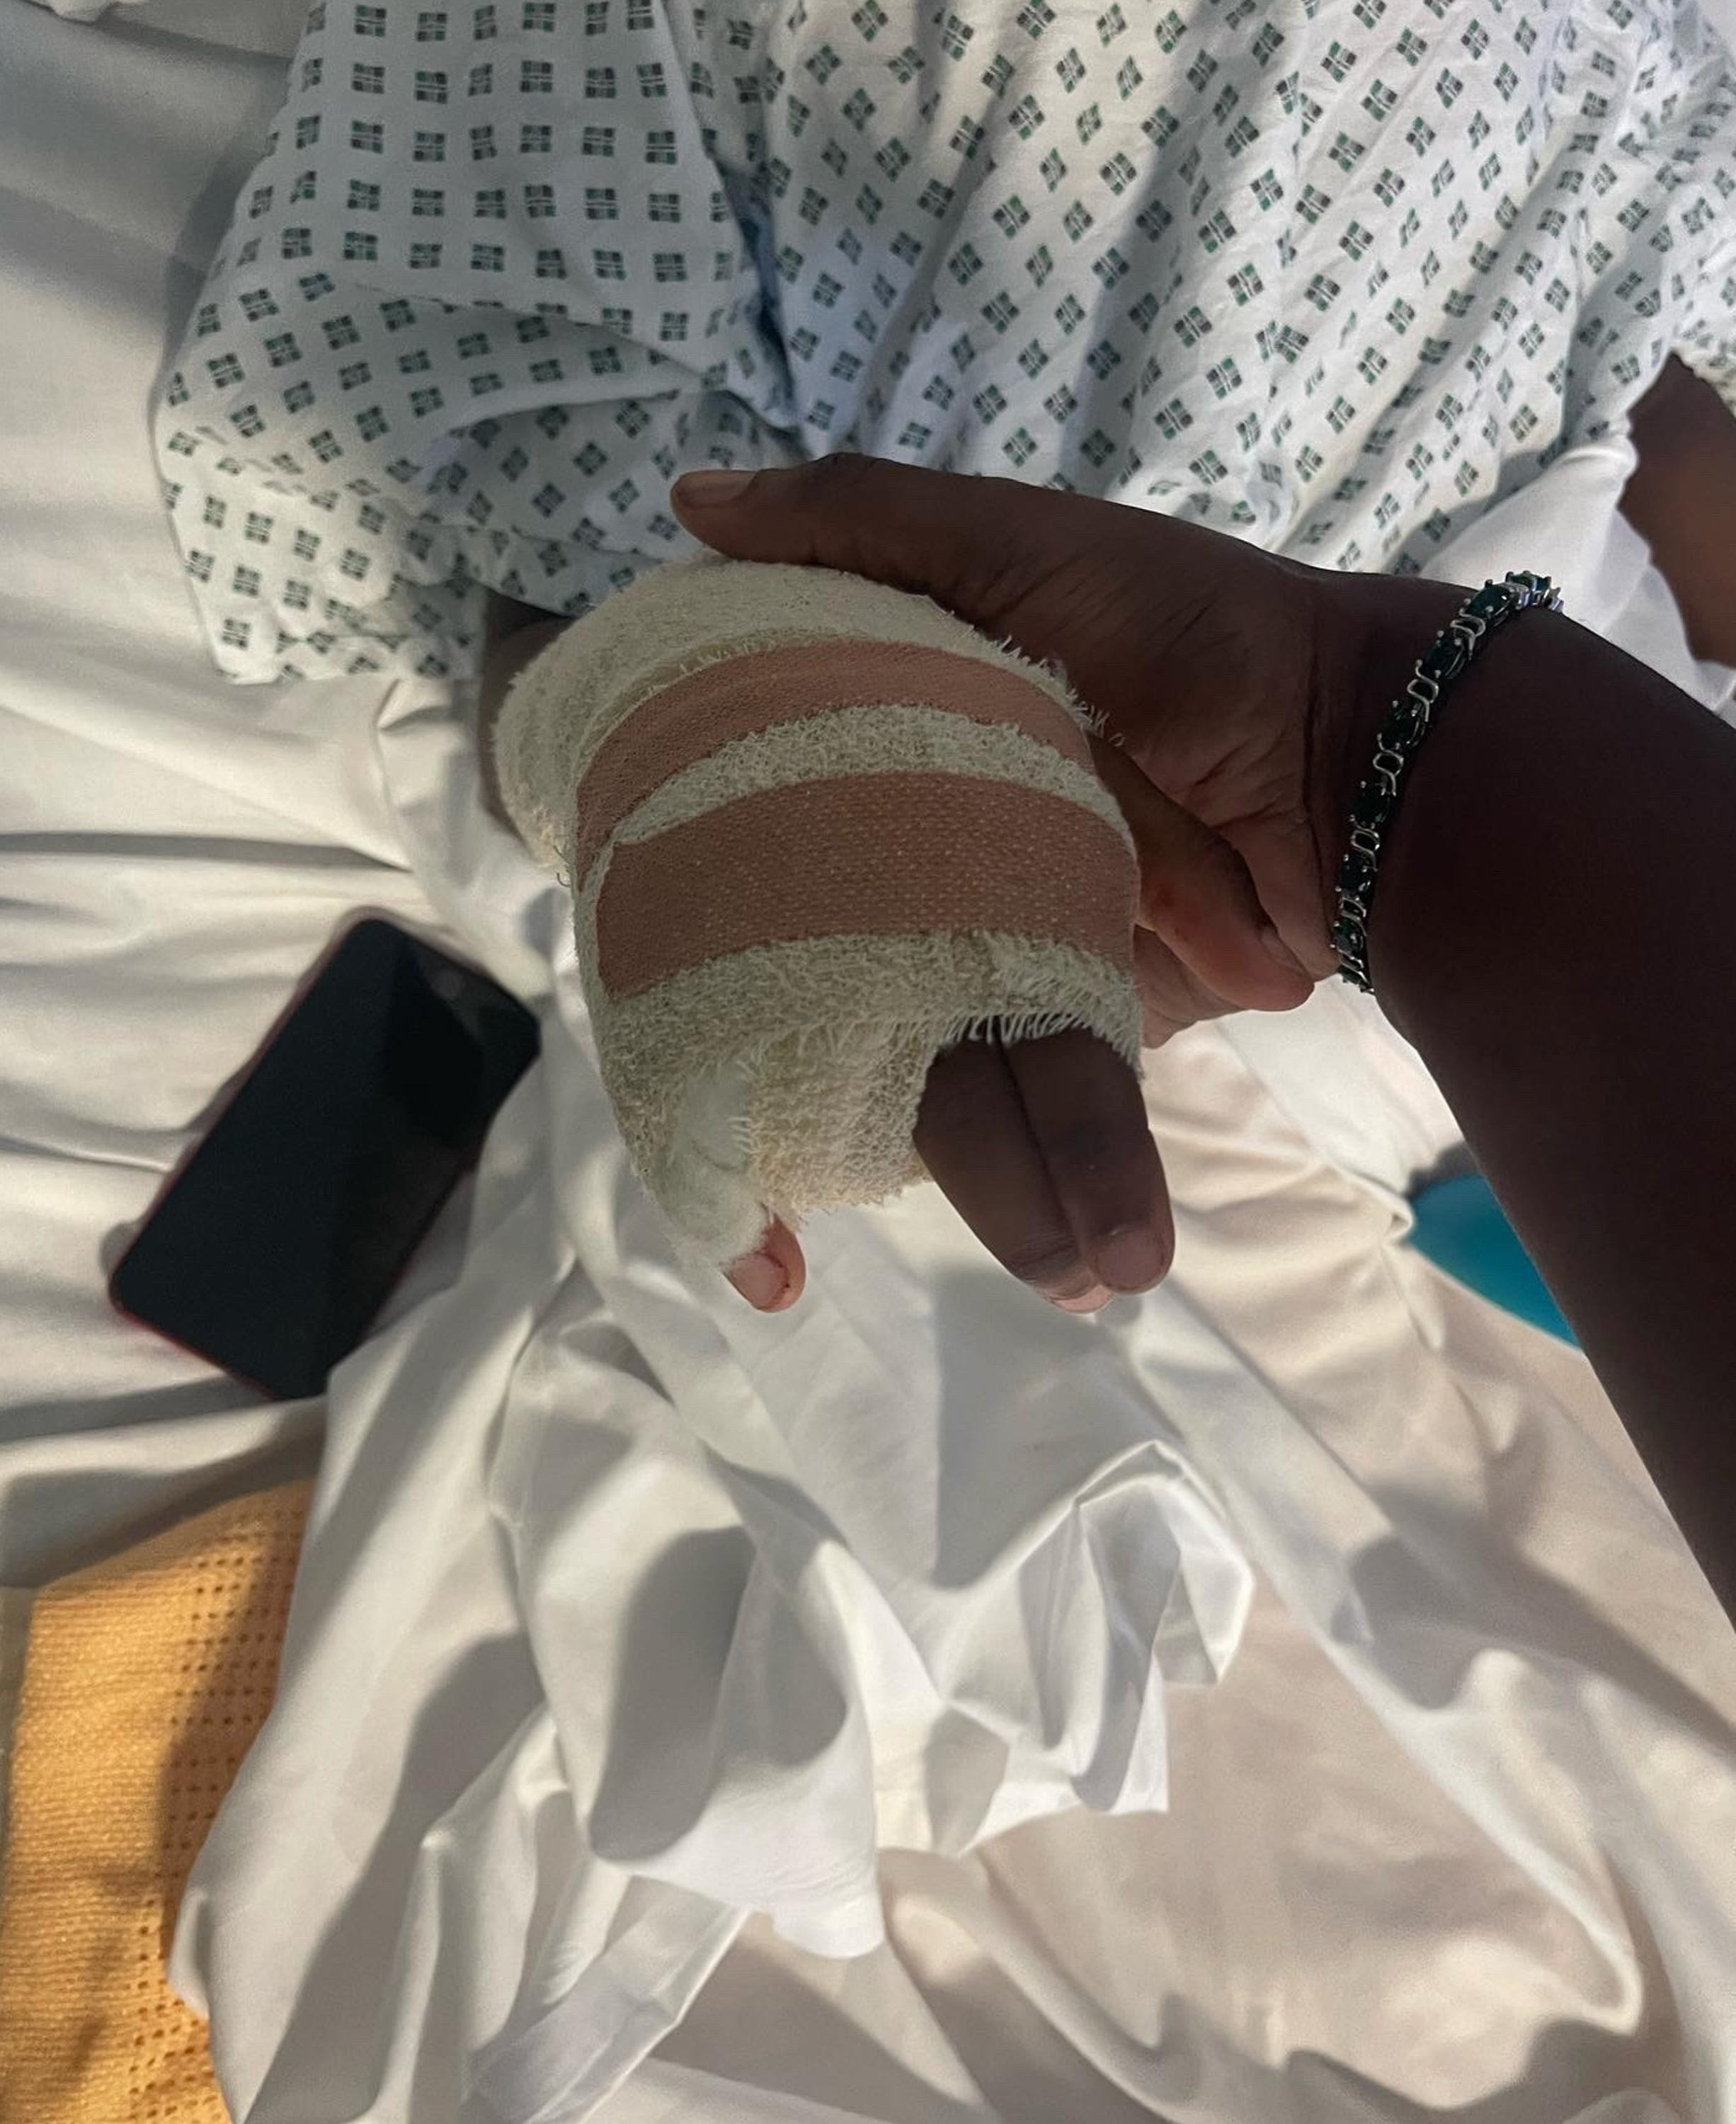 Doctors battled to save Raheem’s finger but were unsuccessful